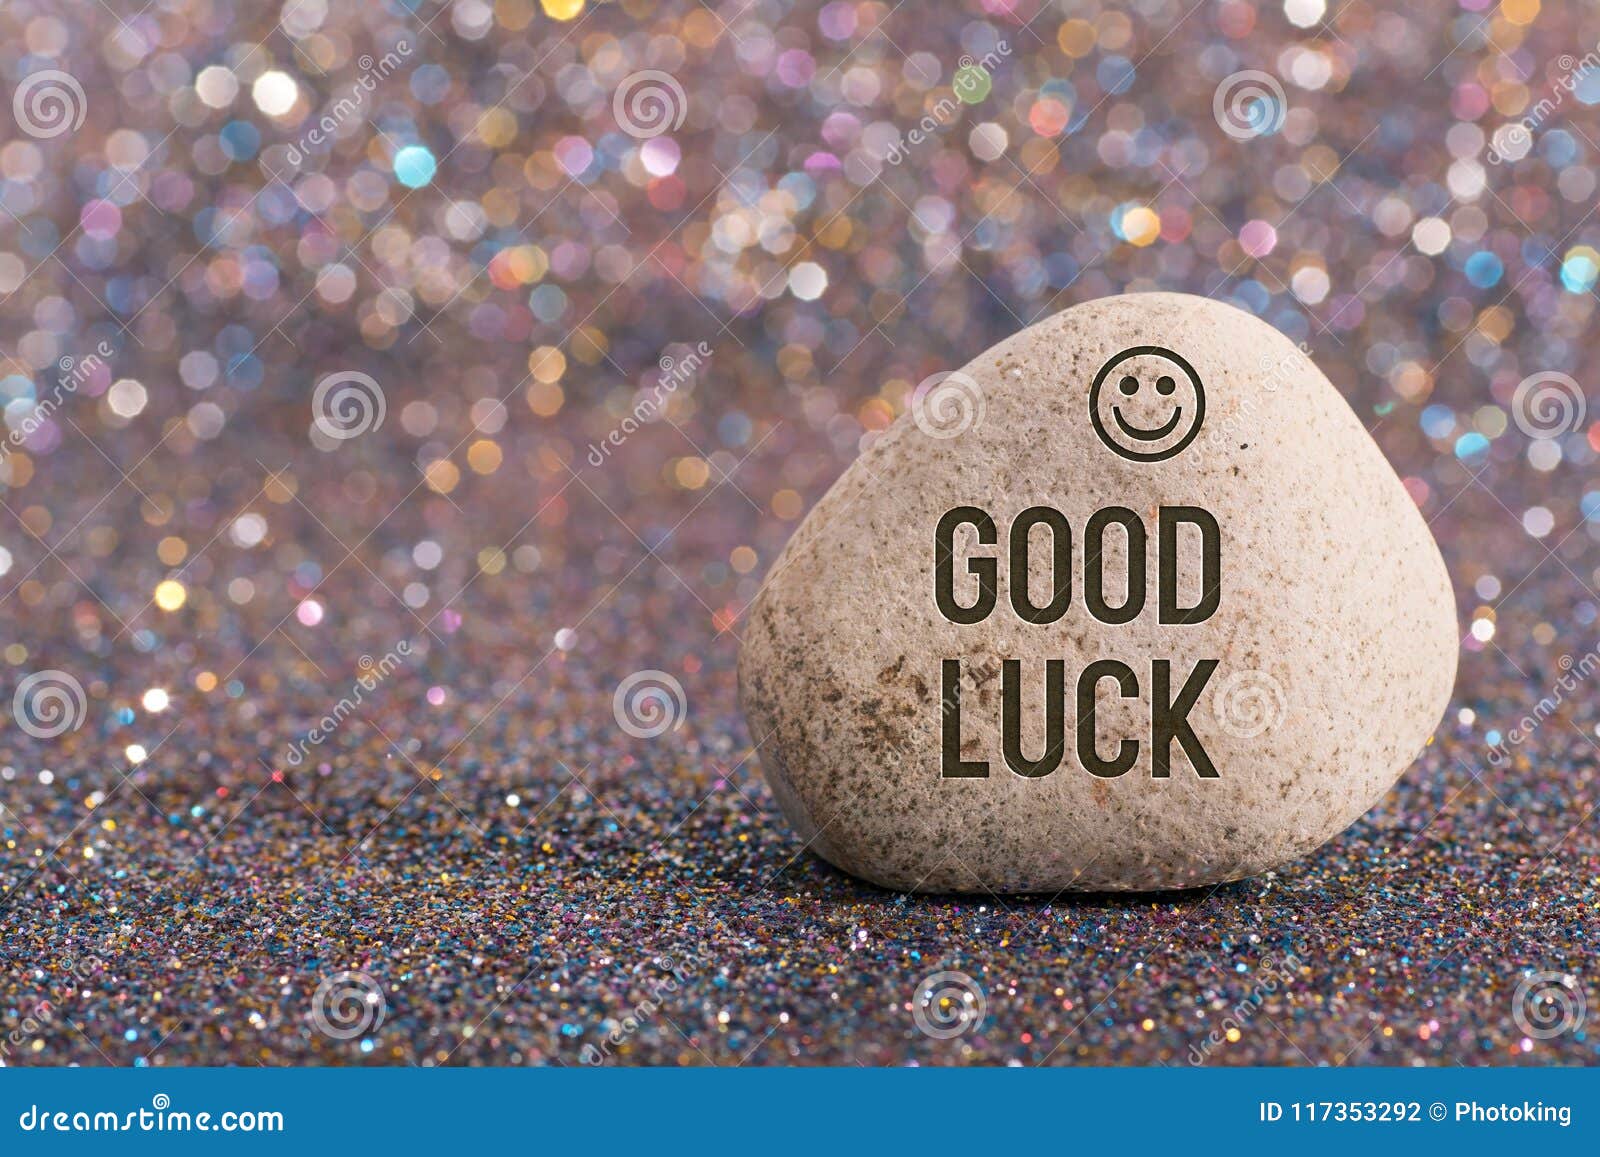 good luck on stone